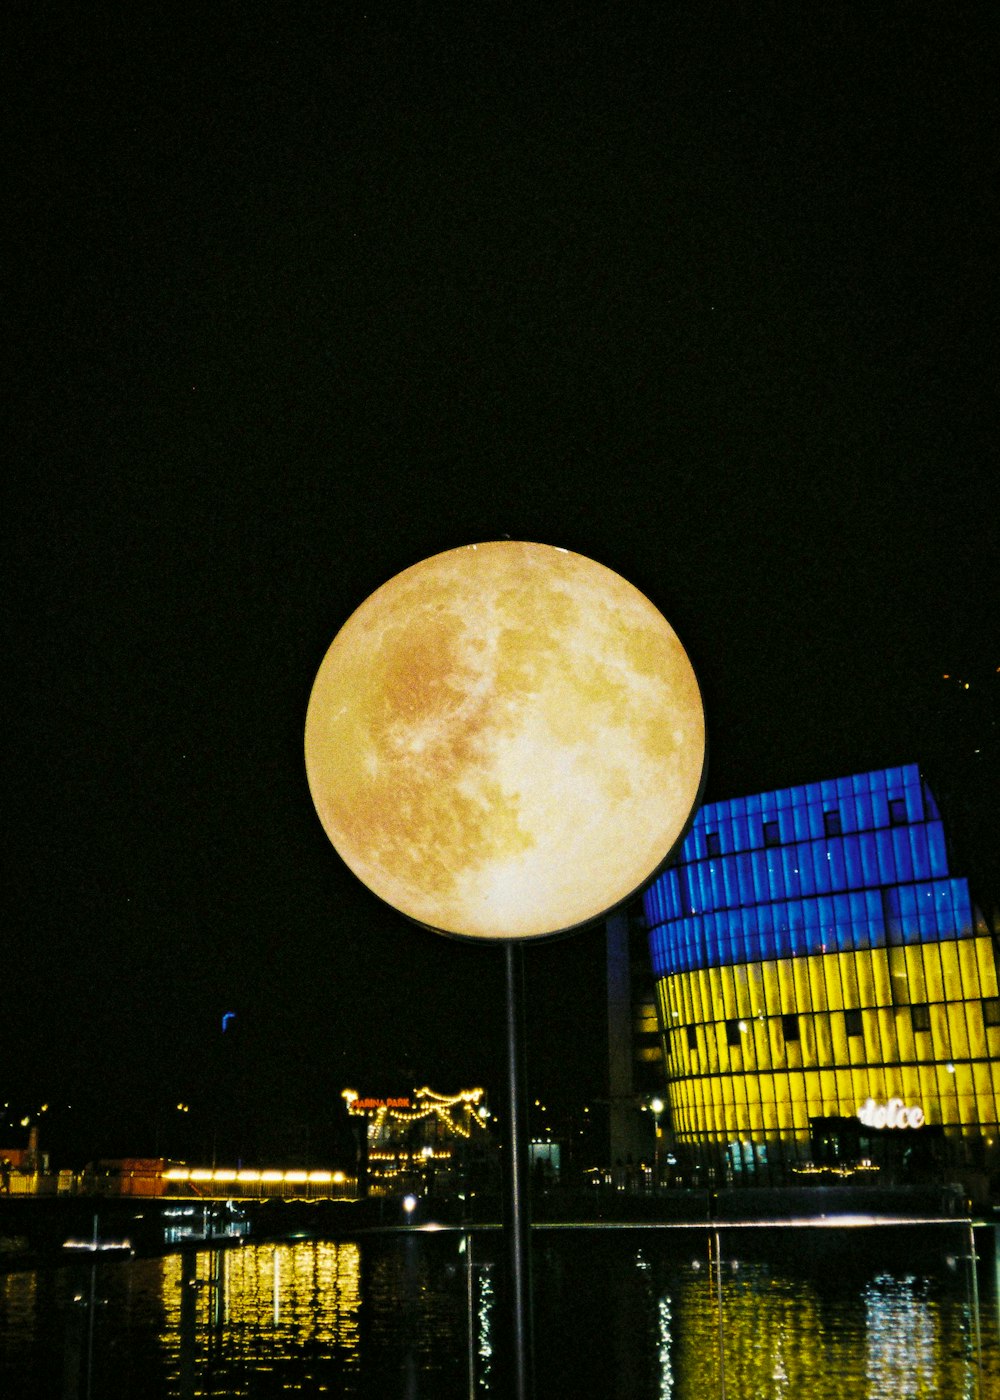 a full moon over a city